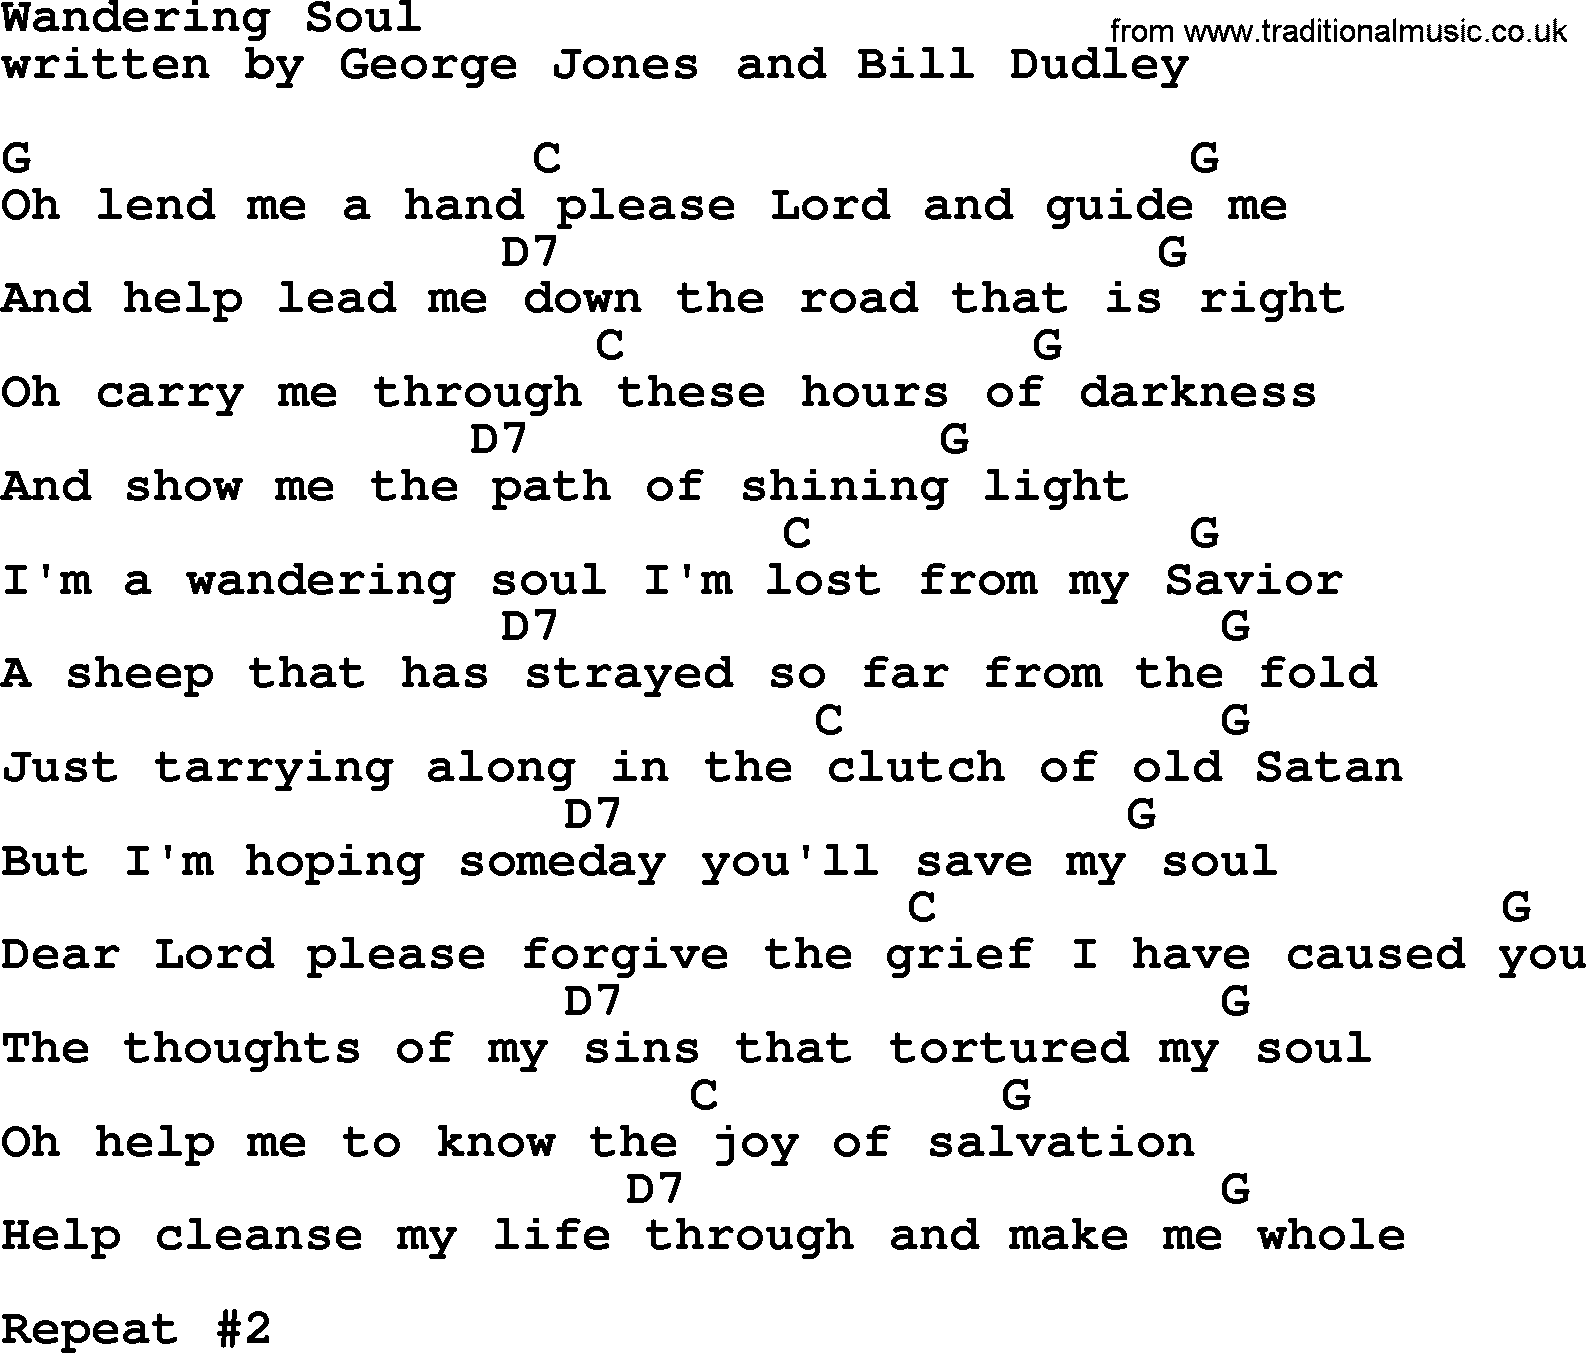 George Jones song: Wandering Soul, lyrics and chords